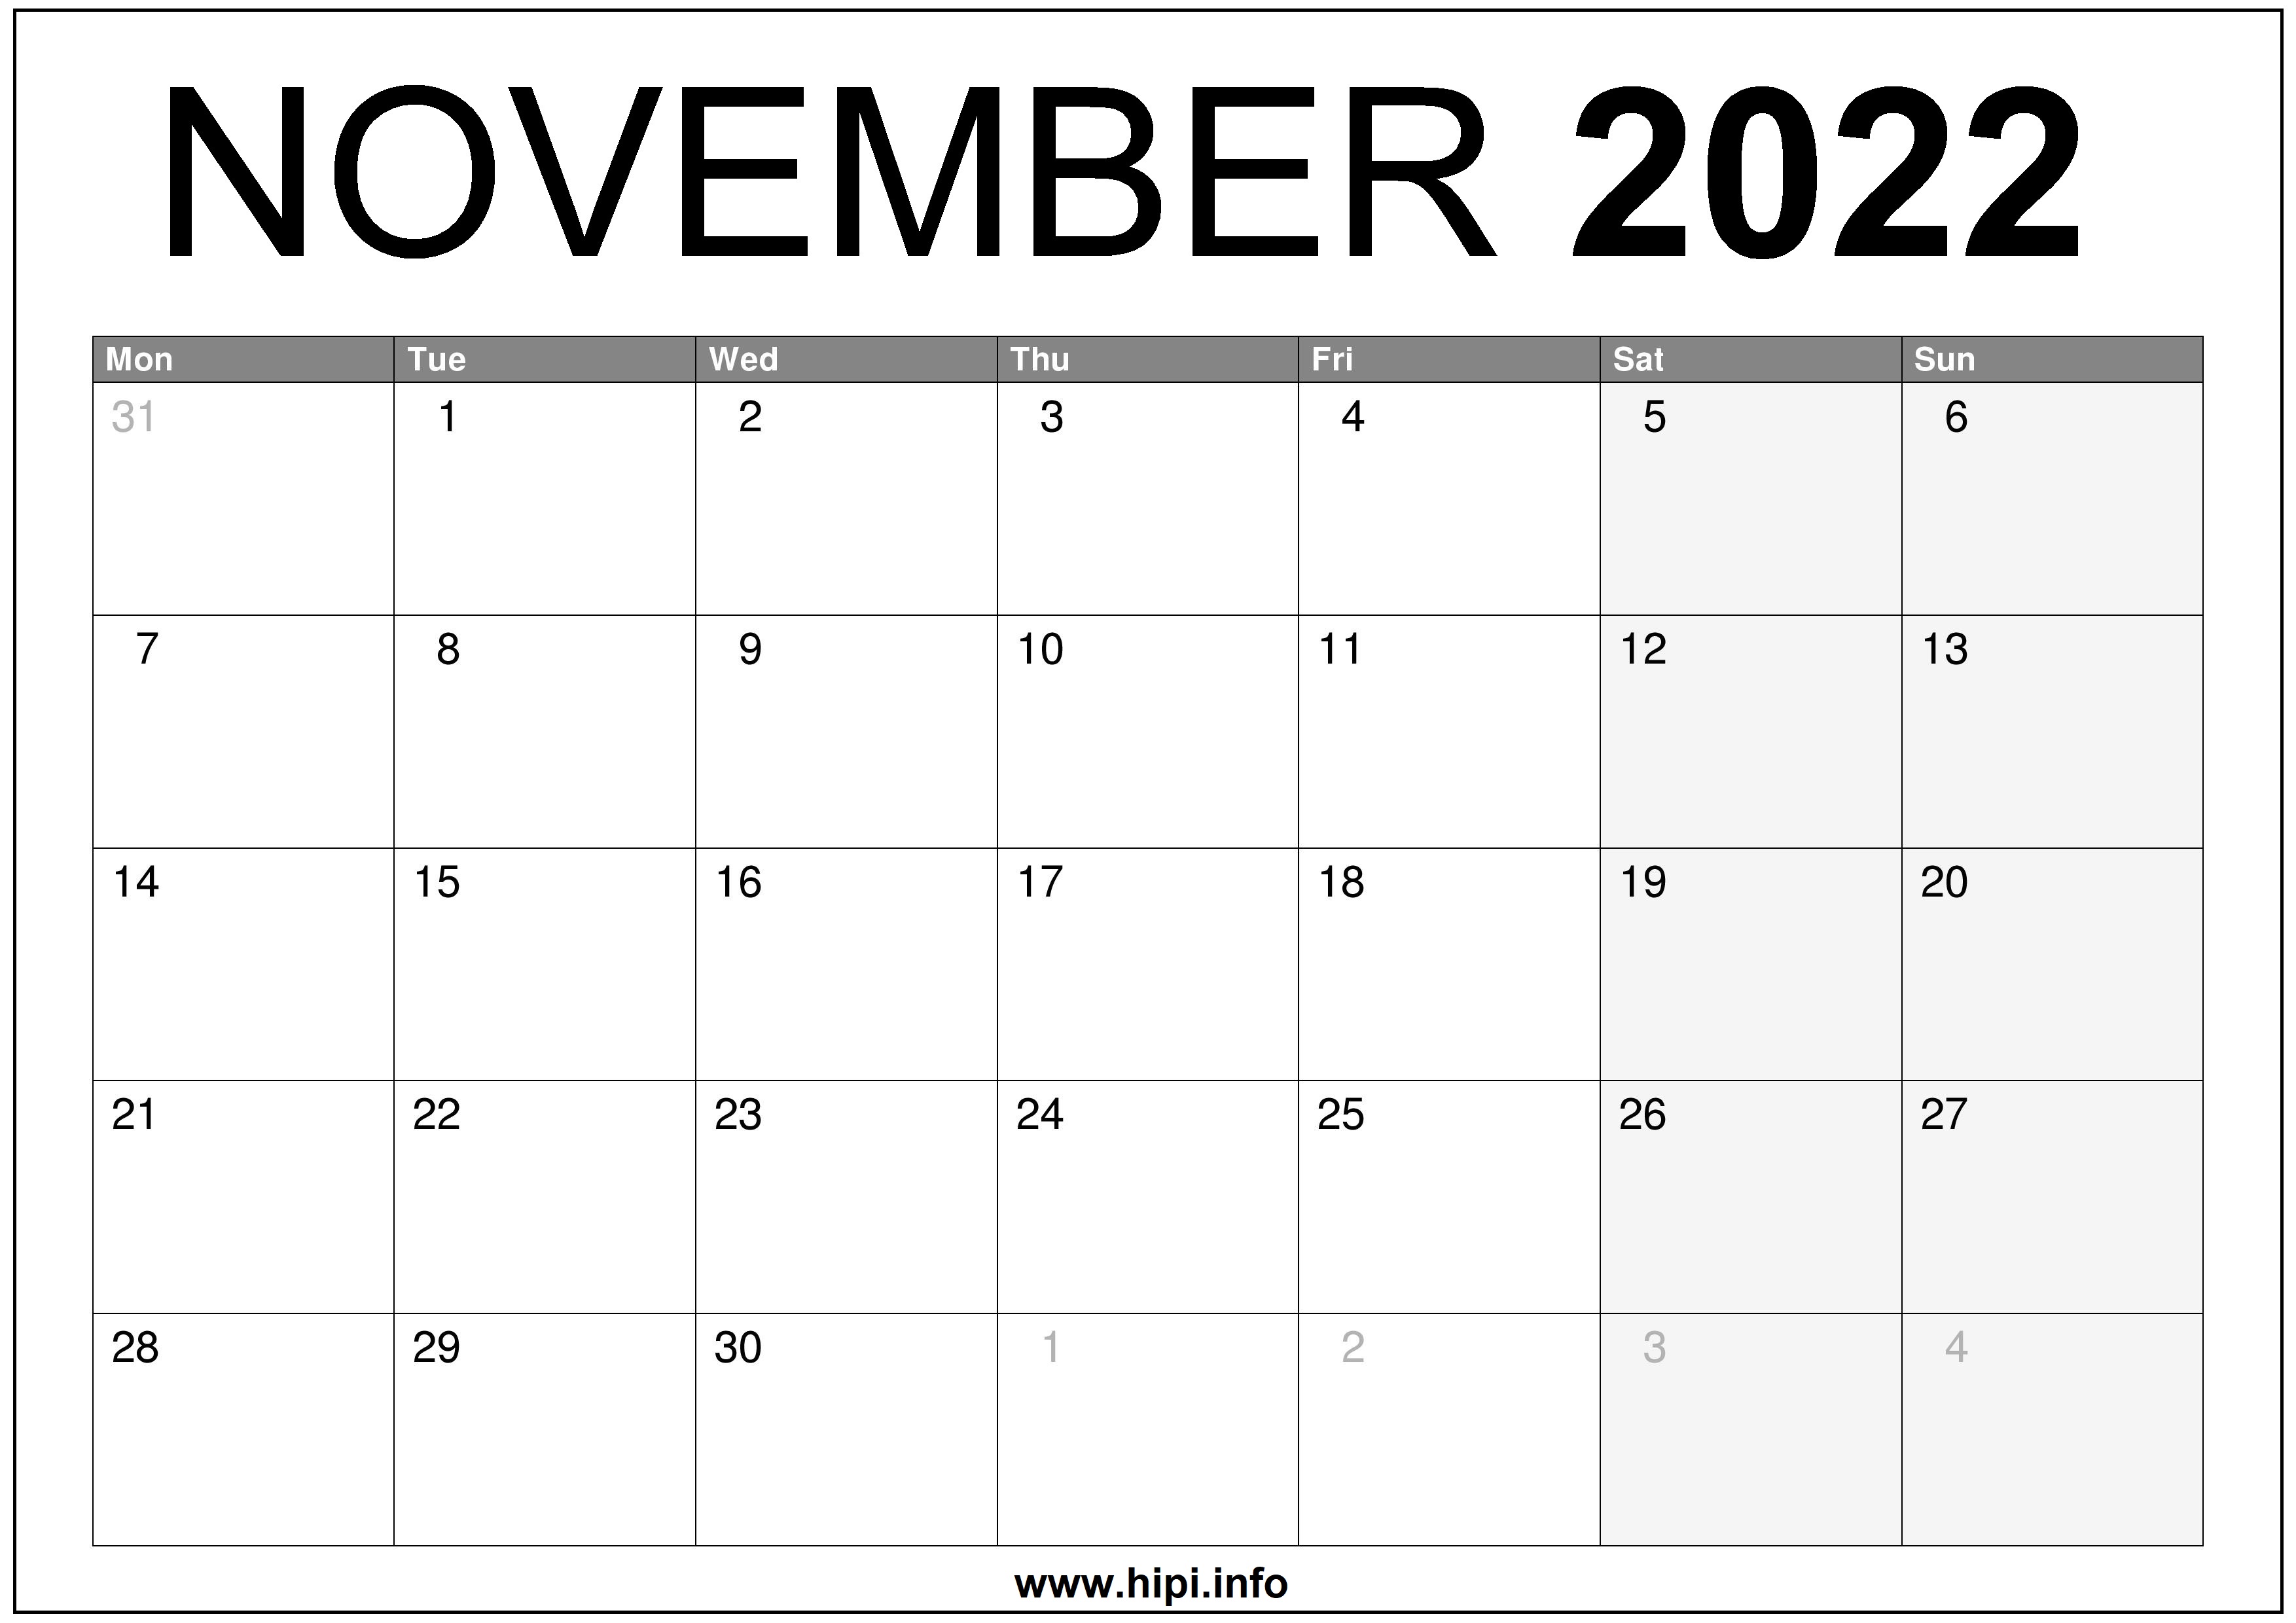 November 2022 Calendar Page November 2022 Uk Calendar Printable Free - Hipi.info | Calendars Printable  Free